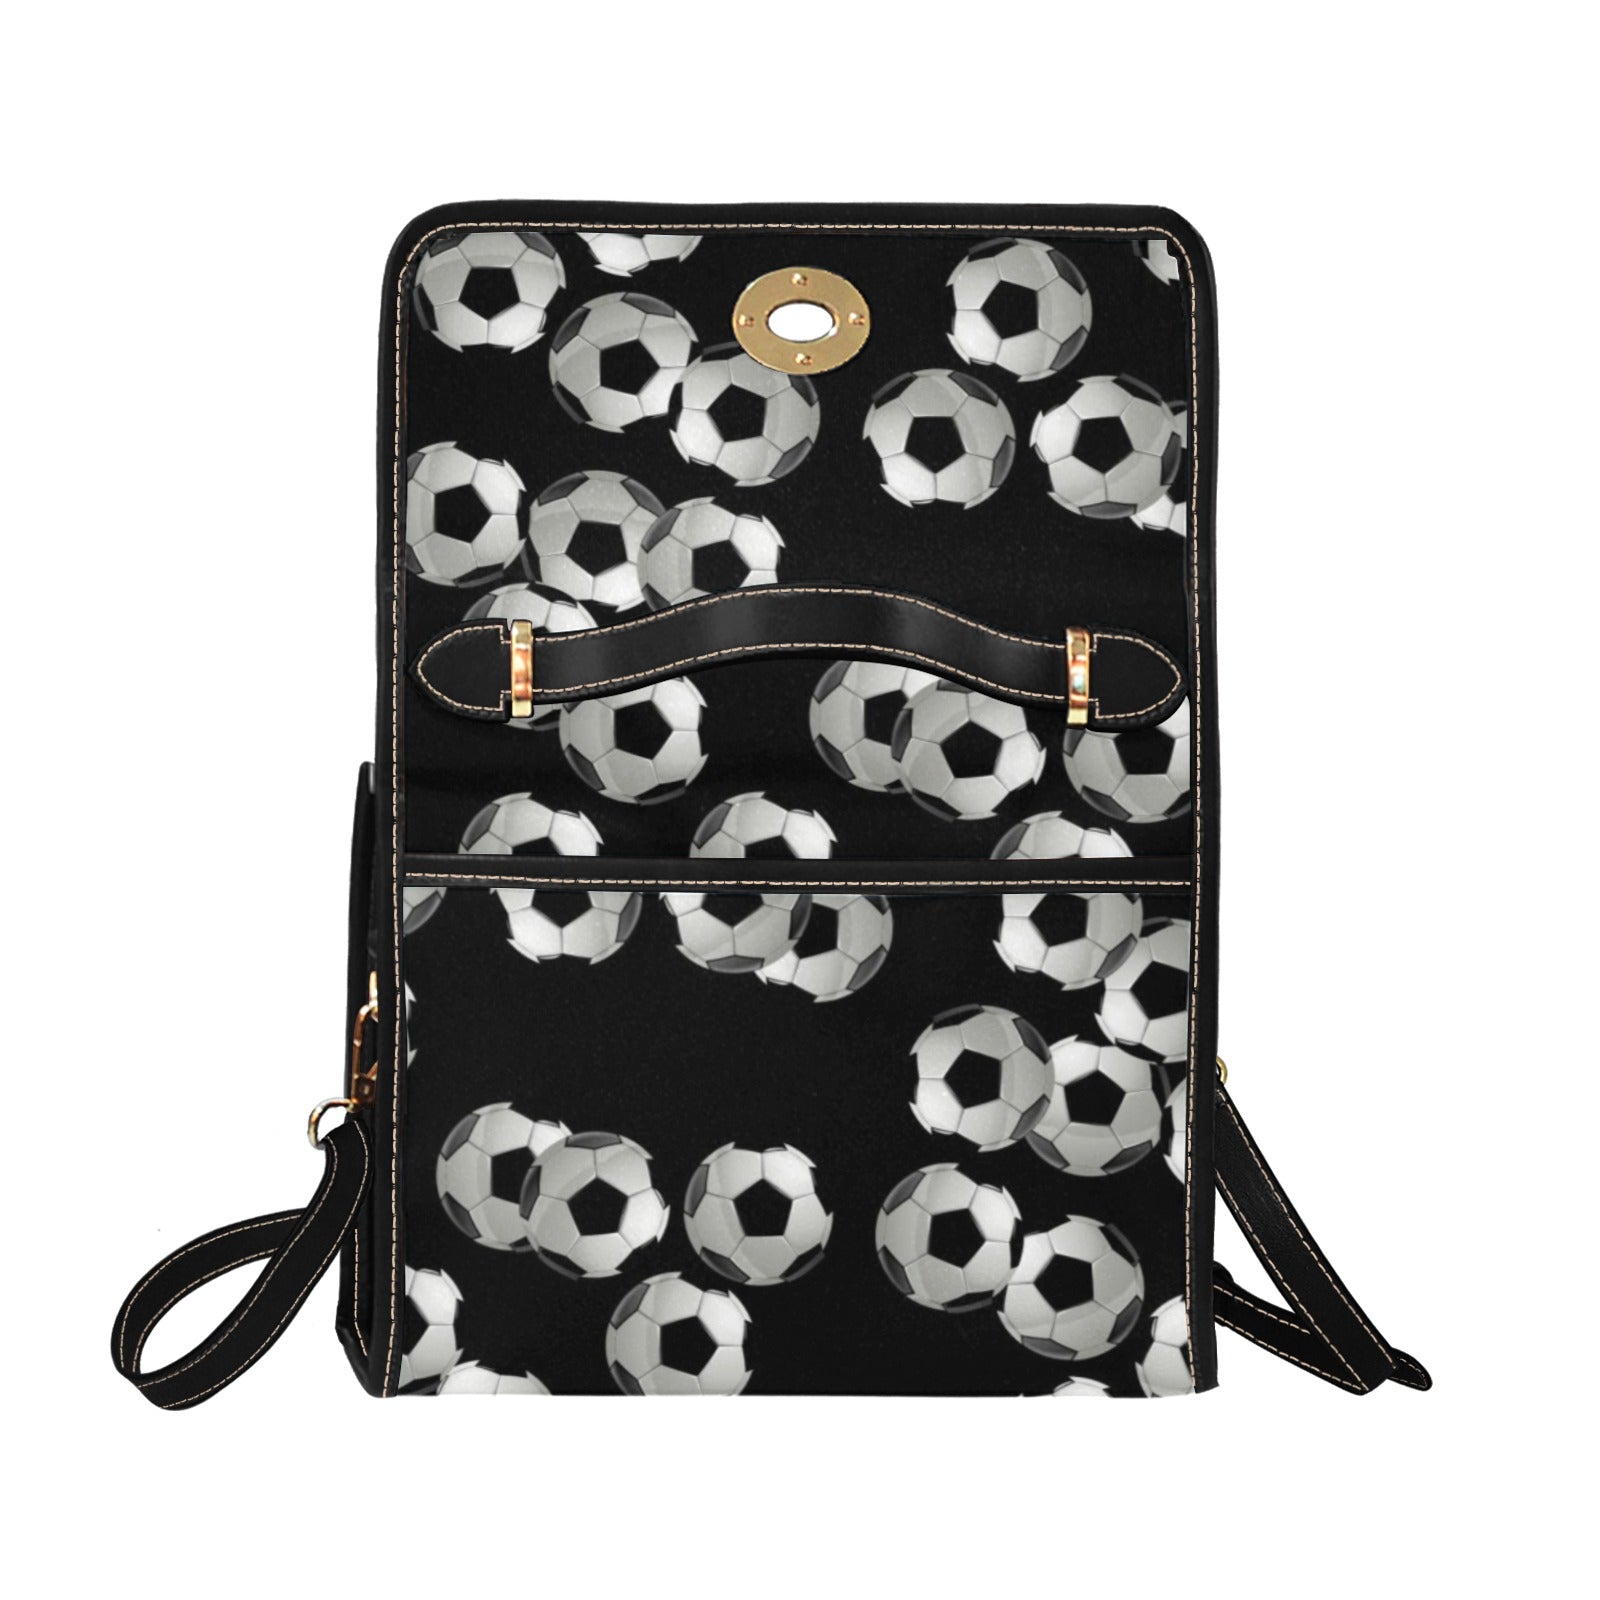 Soccer - Waterproof Canvas Handbag